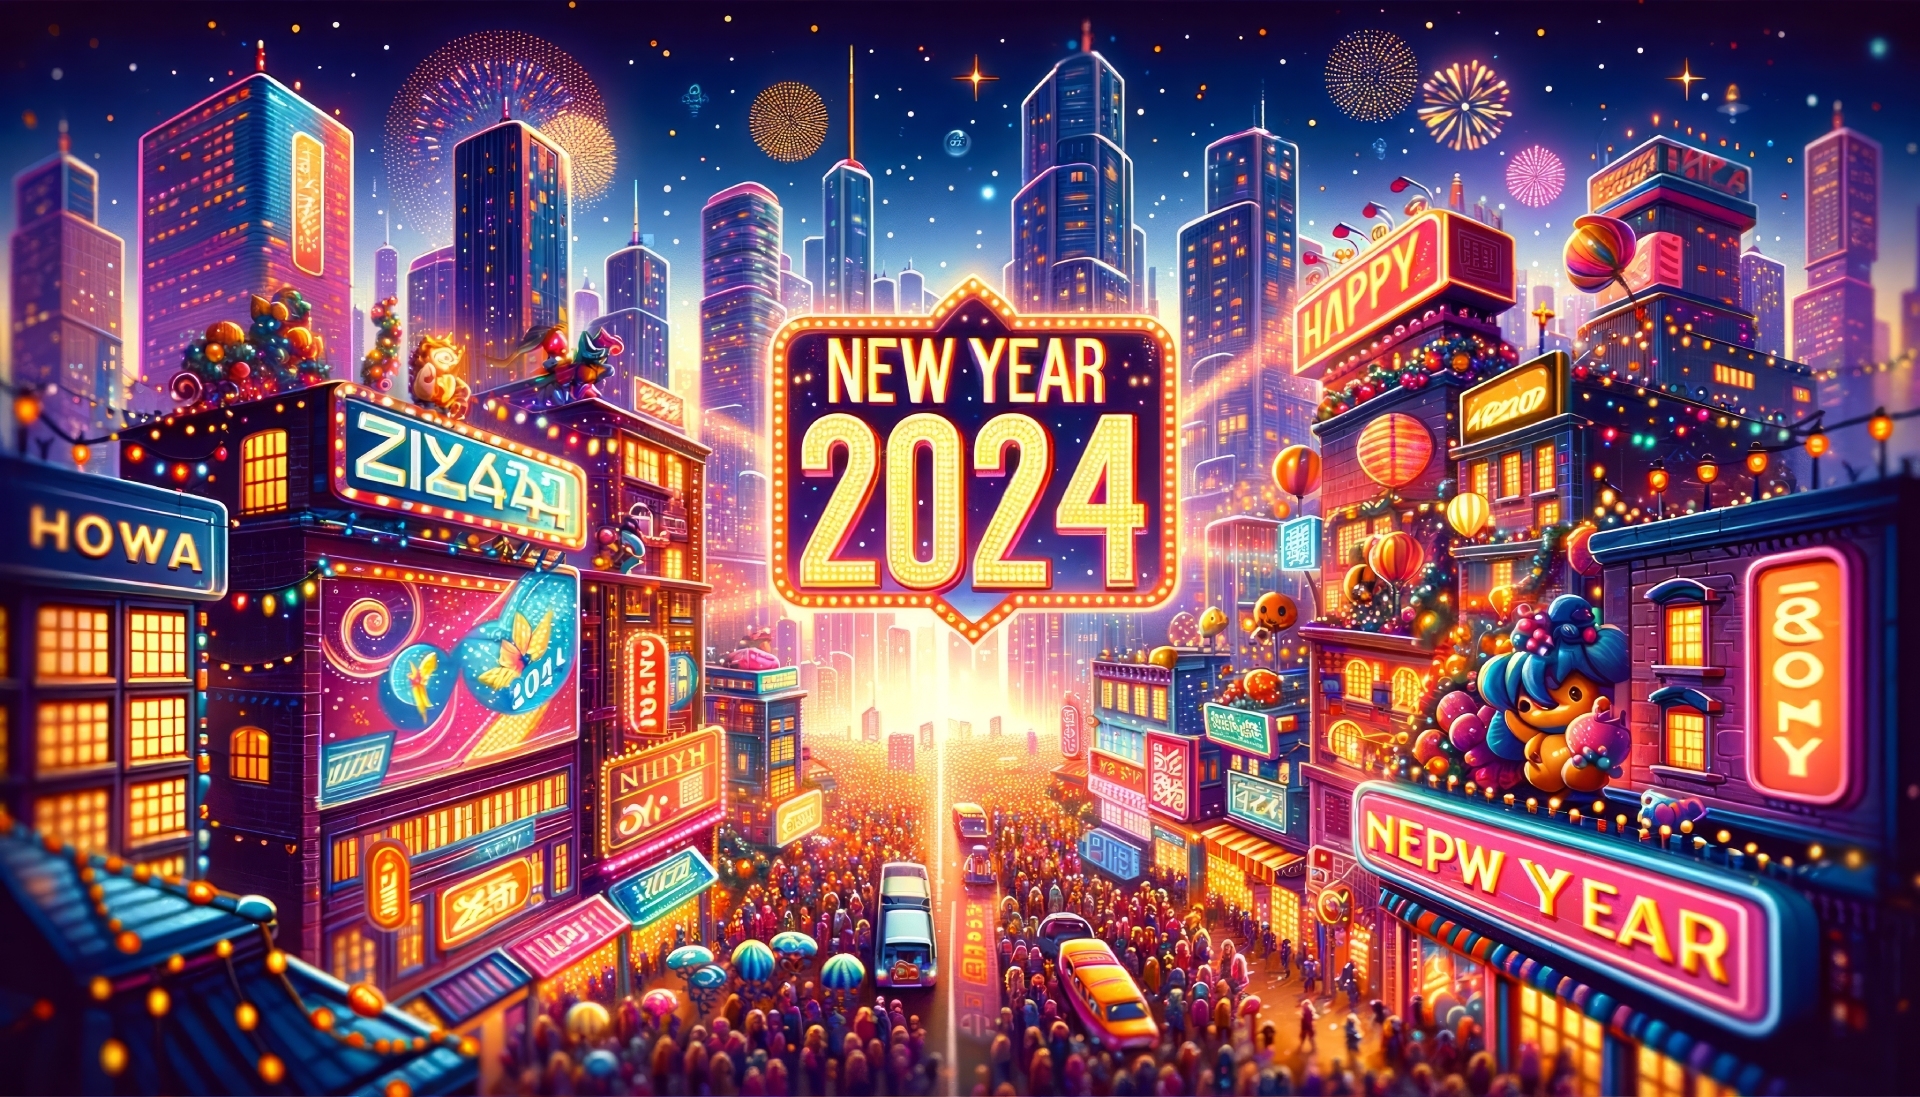 2932x2932 Resolution Happy New Year 2024 Ipad Pro Retina Display